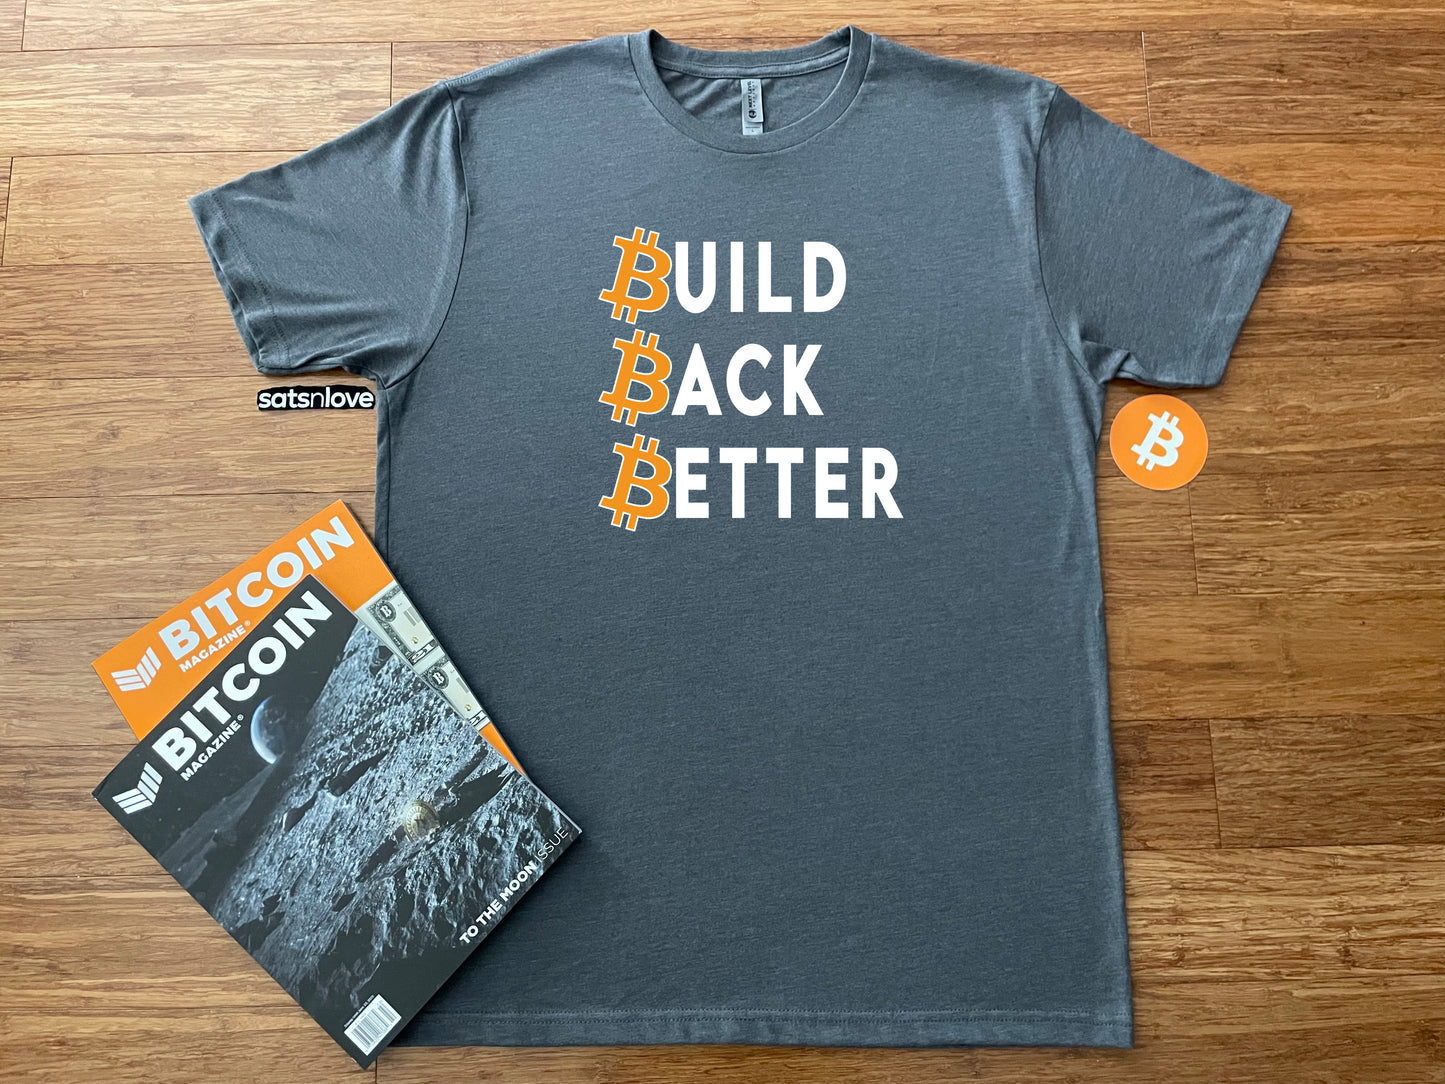 Build Back Better Bitcoin B's